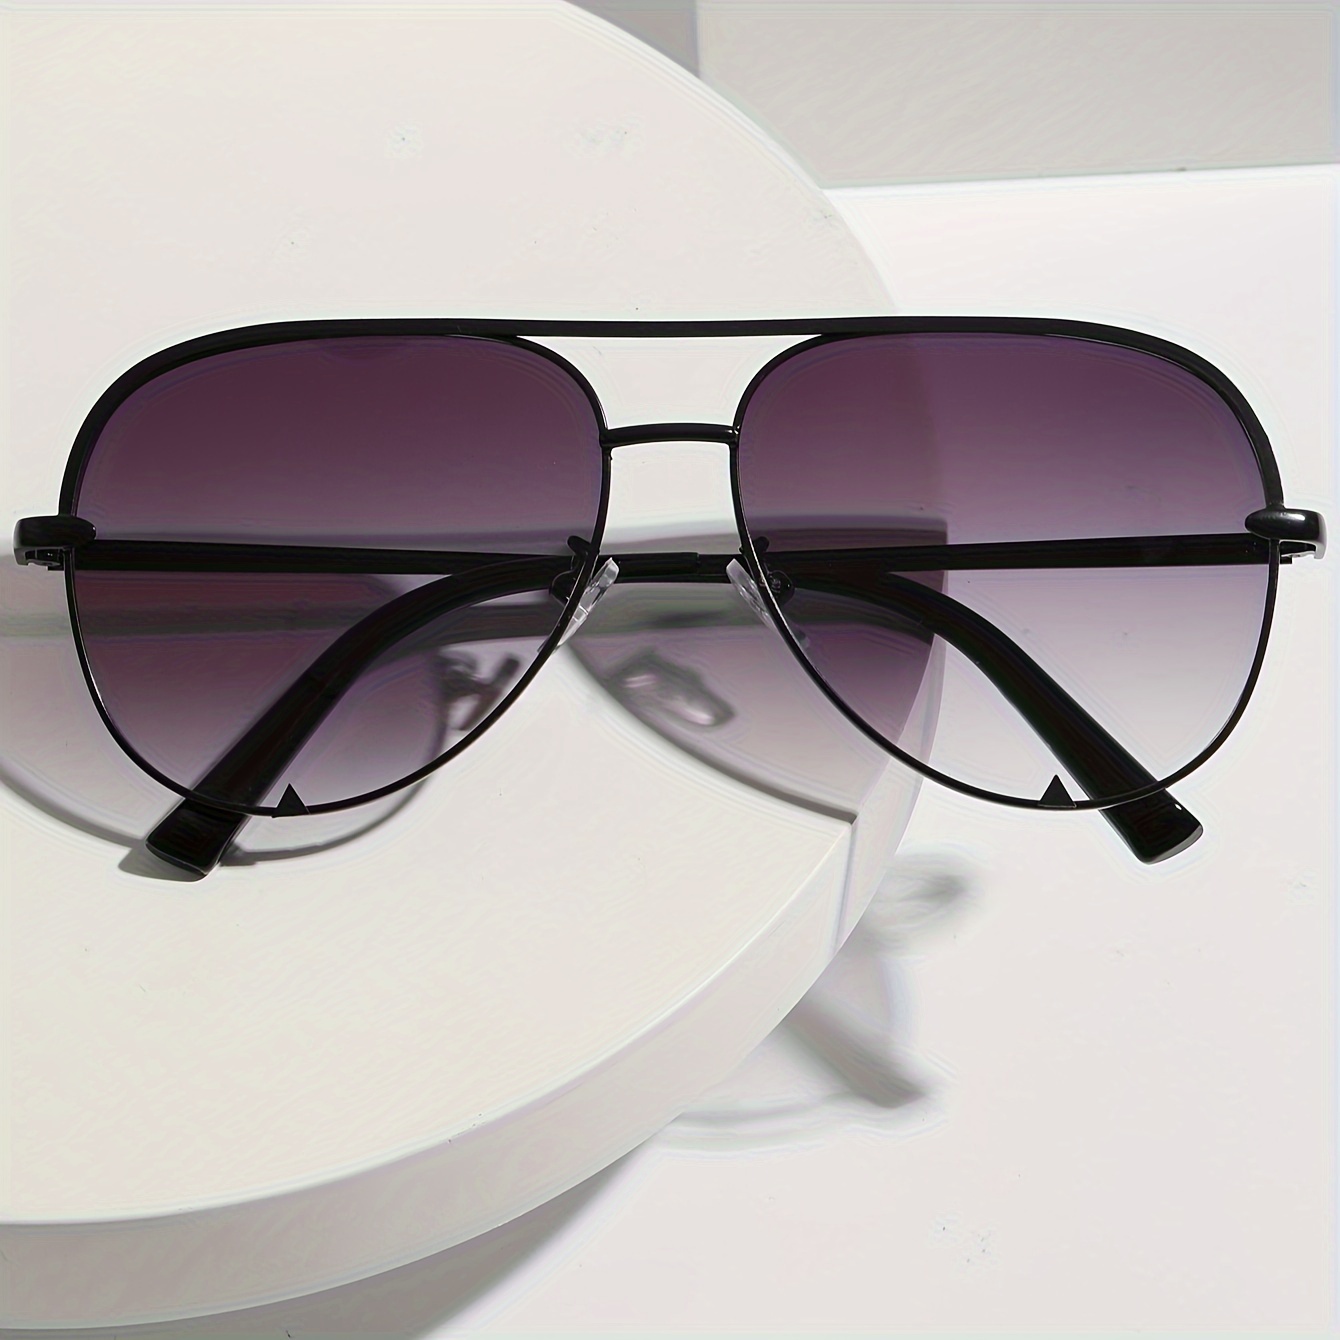 

Fashion Double Bridge Glasses For Women Men, Casual Sun Shades For Driving Beach Travel